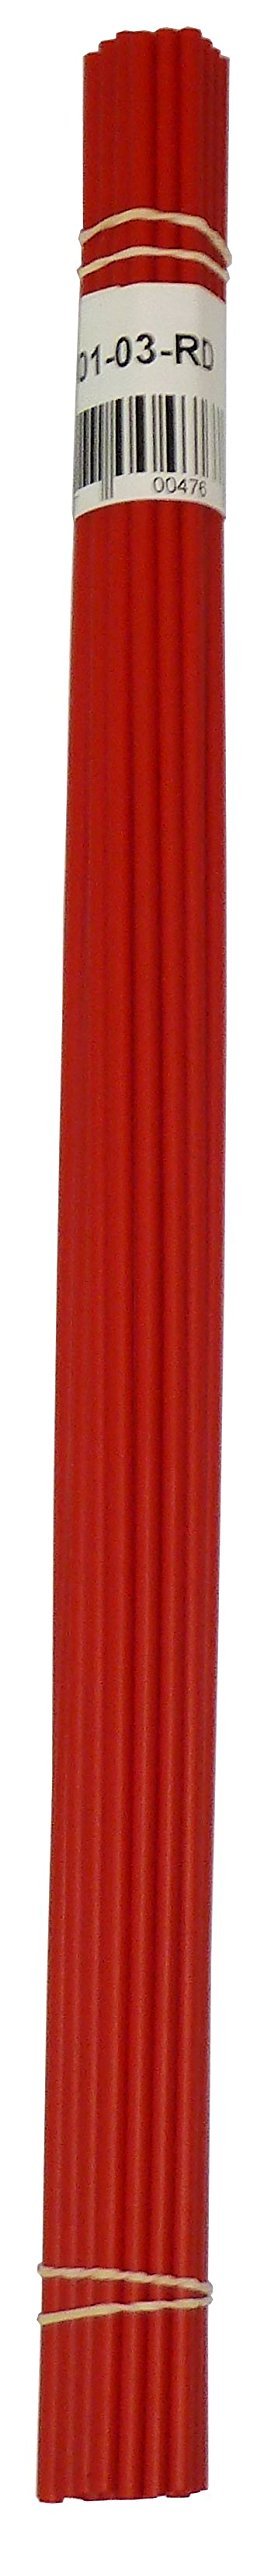 Polypropylene Plastic Welding Rod, 1/8" Diameter, 30 Ft, Red - NewNest Australia